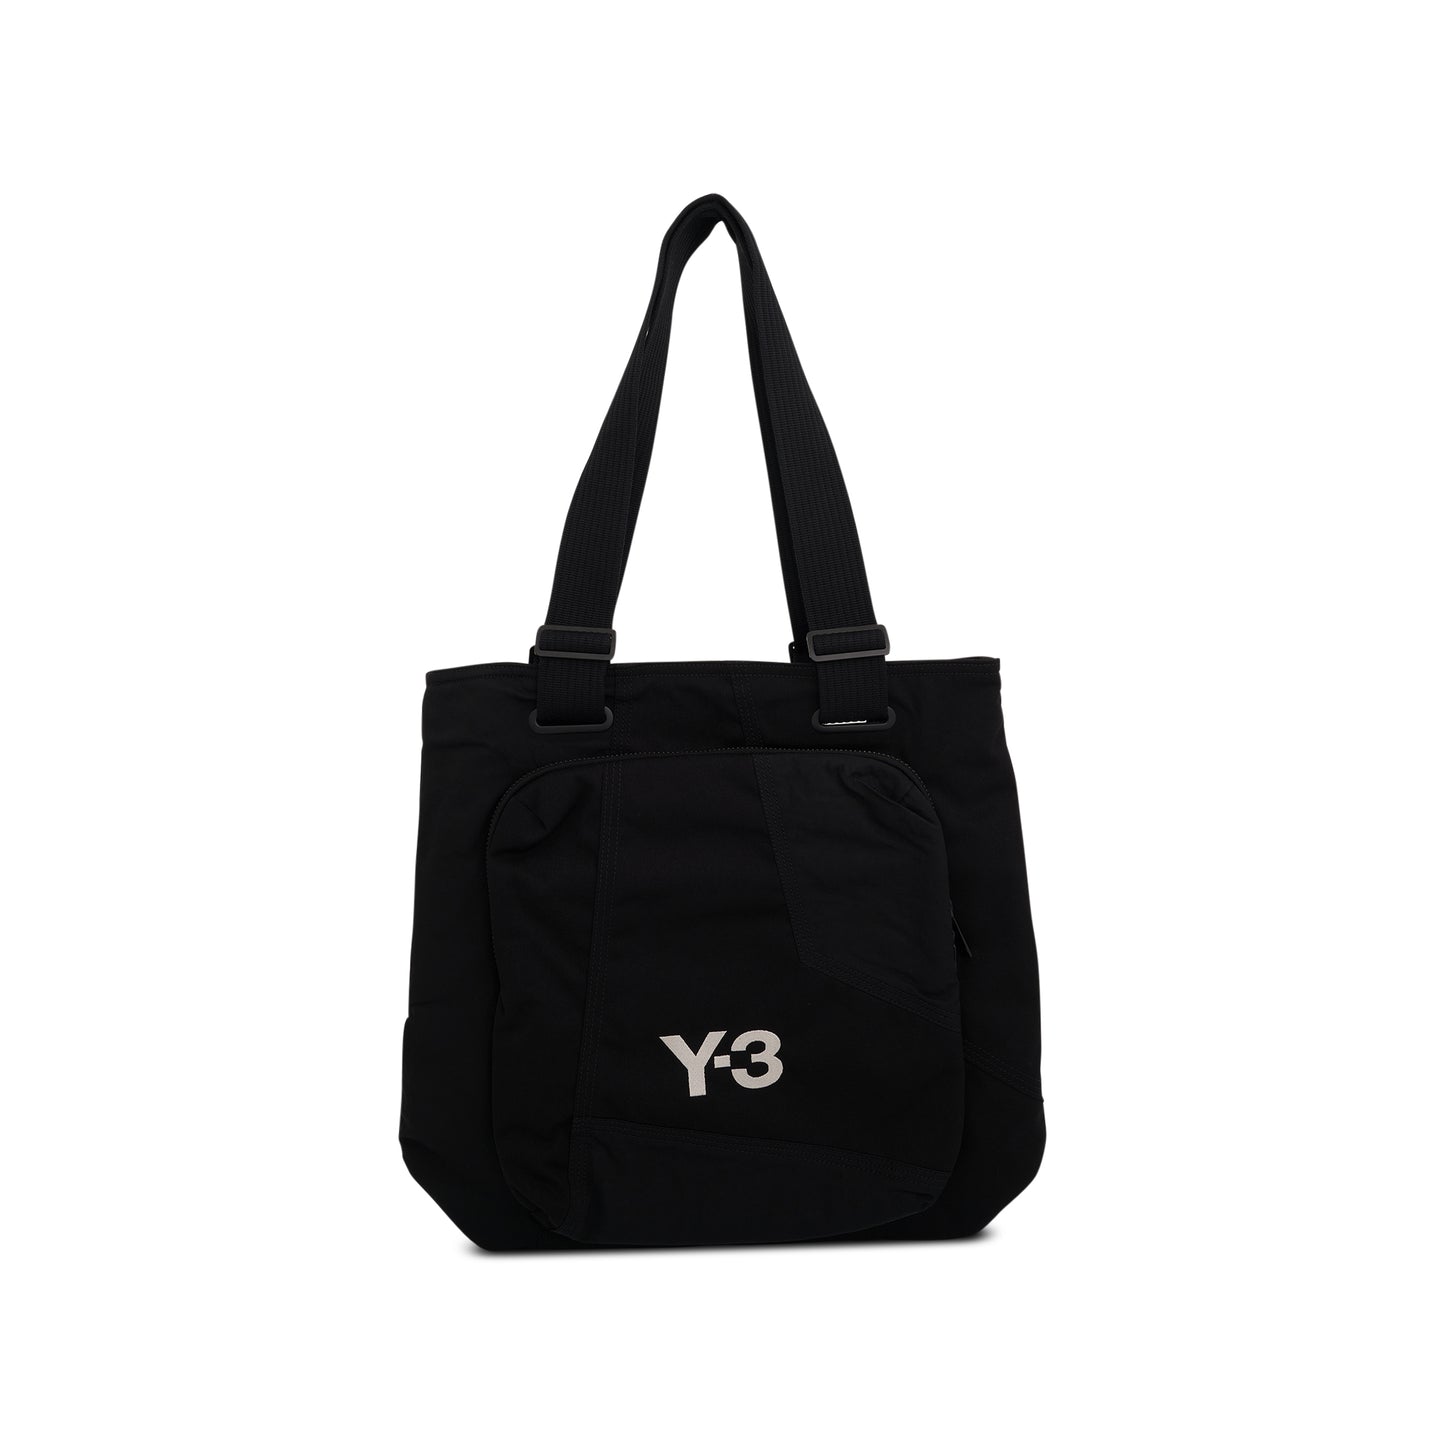 Classic Y-3 Tote Bag in Black